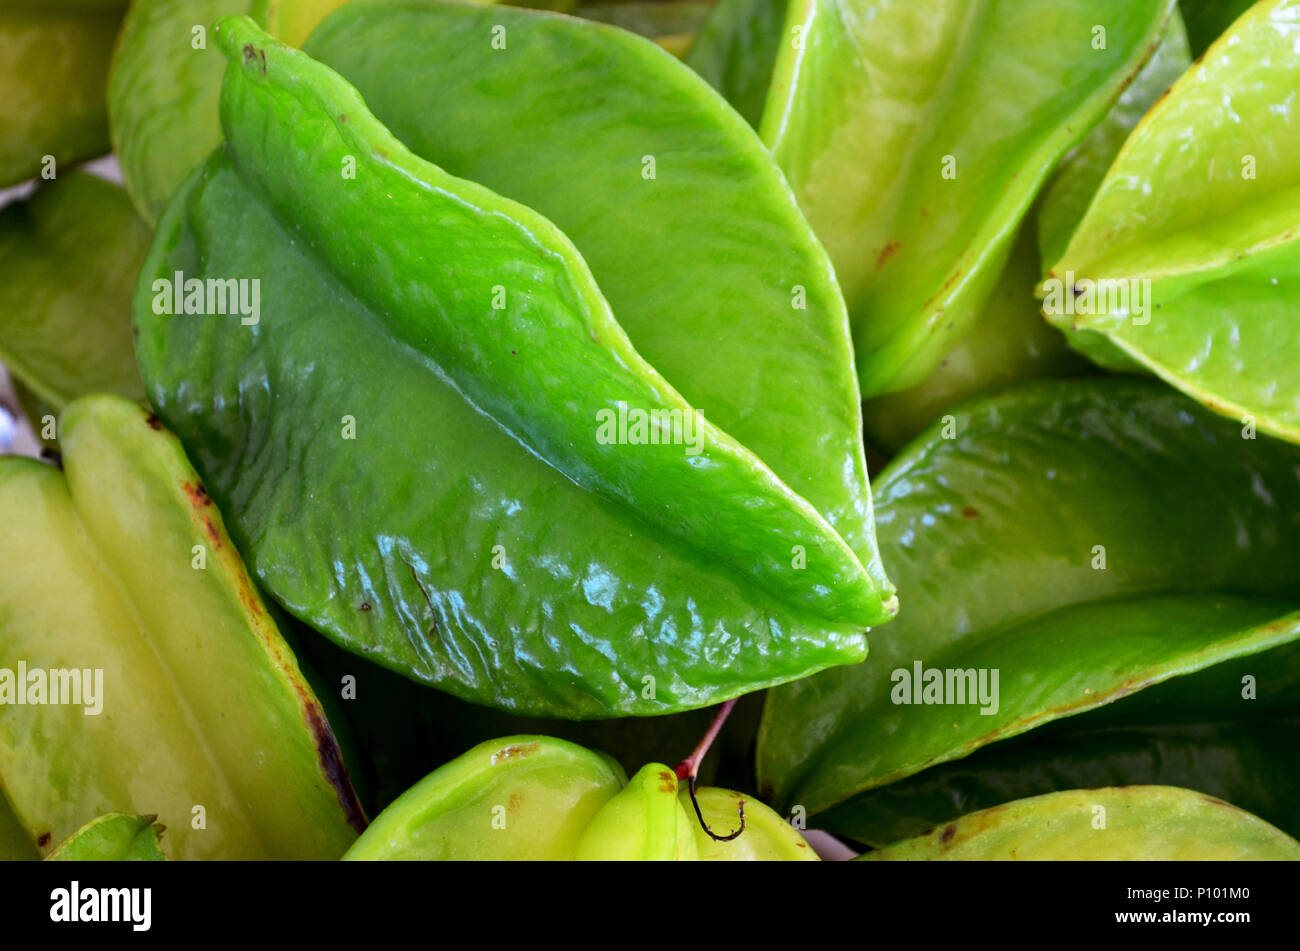 Green start fruit closeup Stock Photo